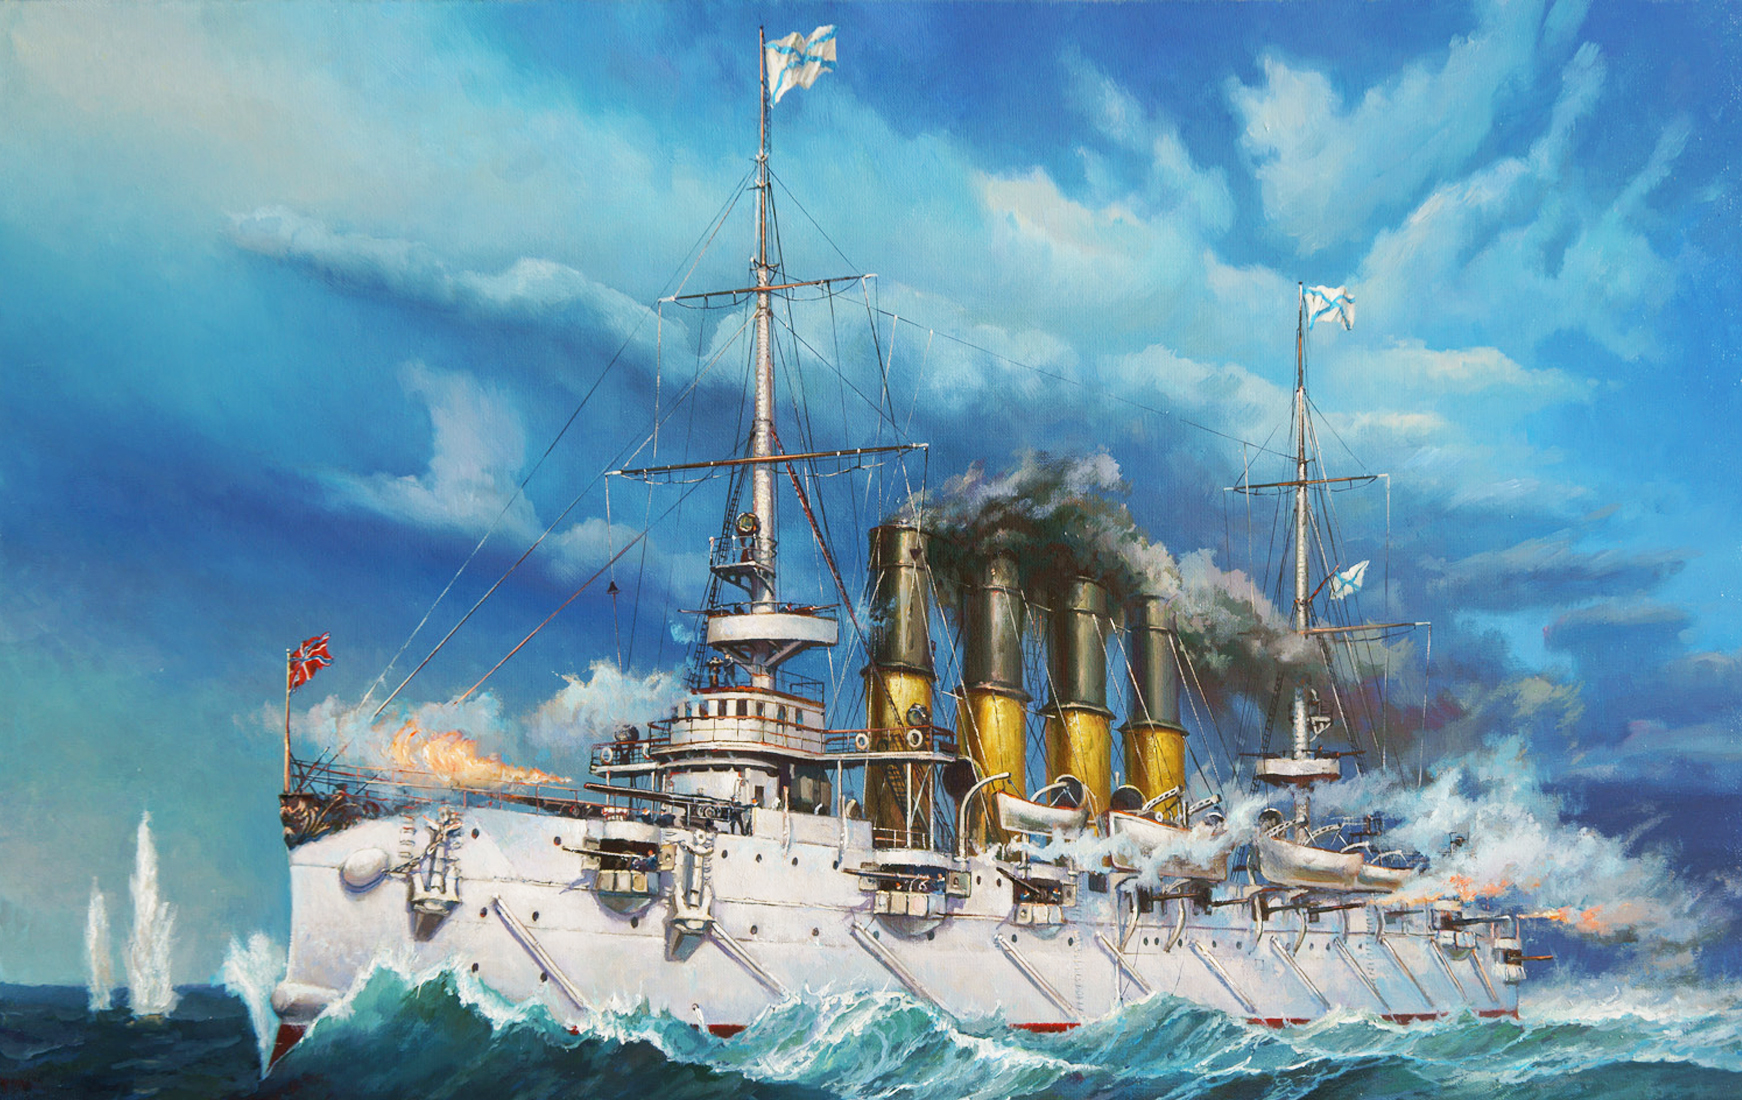 Японская эскадра 1904. Варяг бронепалубный крейсер. Крейсер Варяг 1904. Варяг бронепалубный крейсер бой. Варяг крейсер в бою 1904.